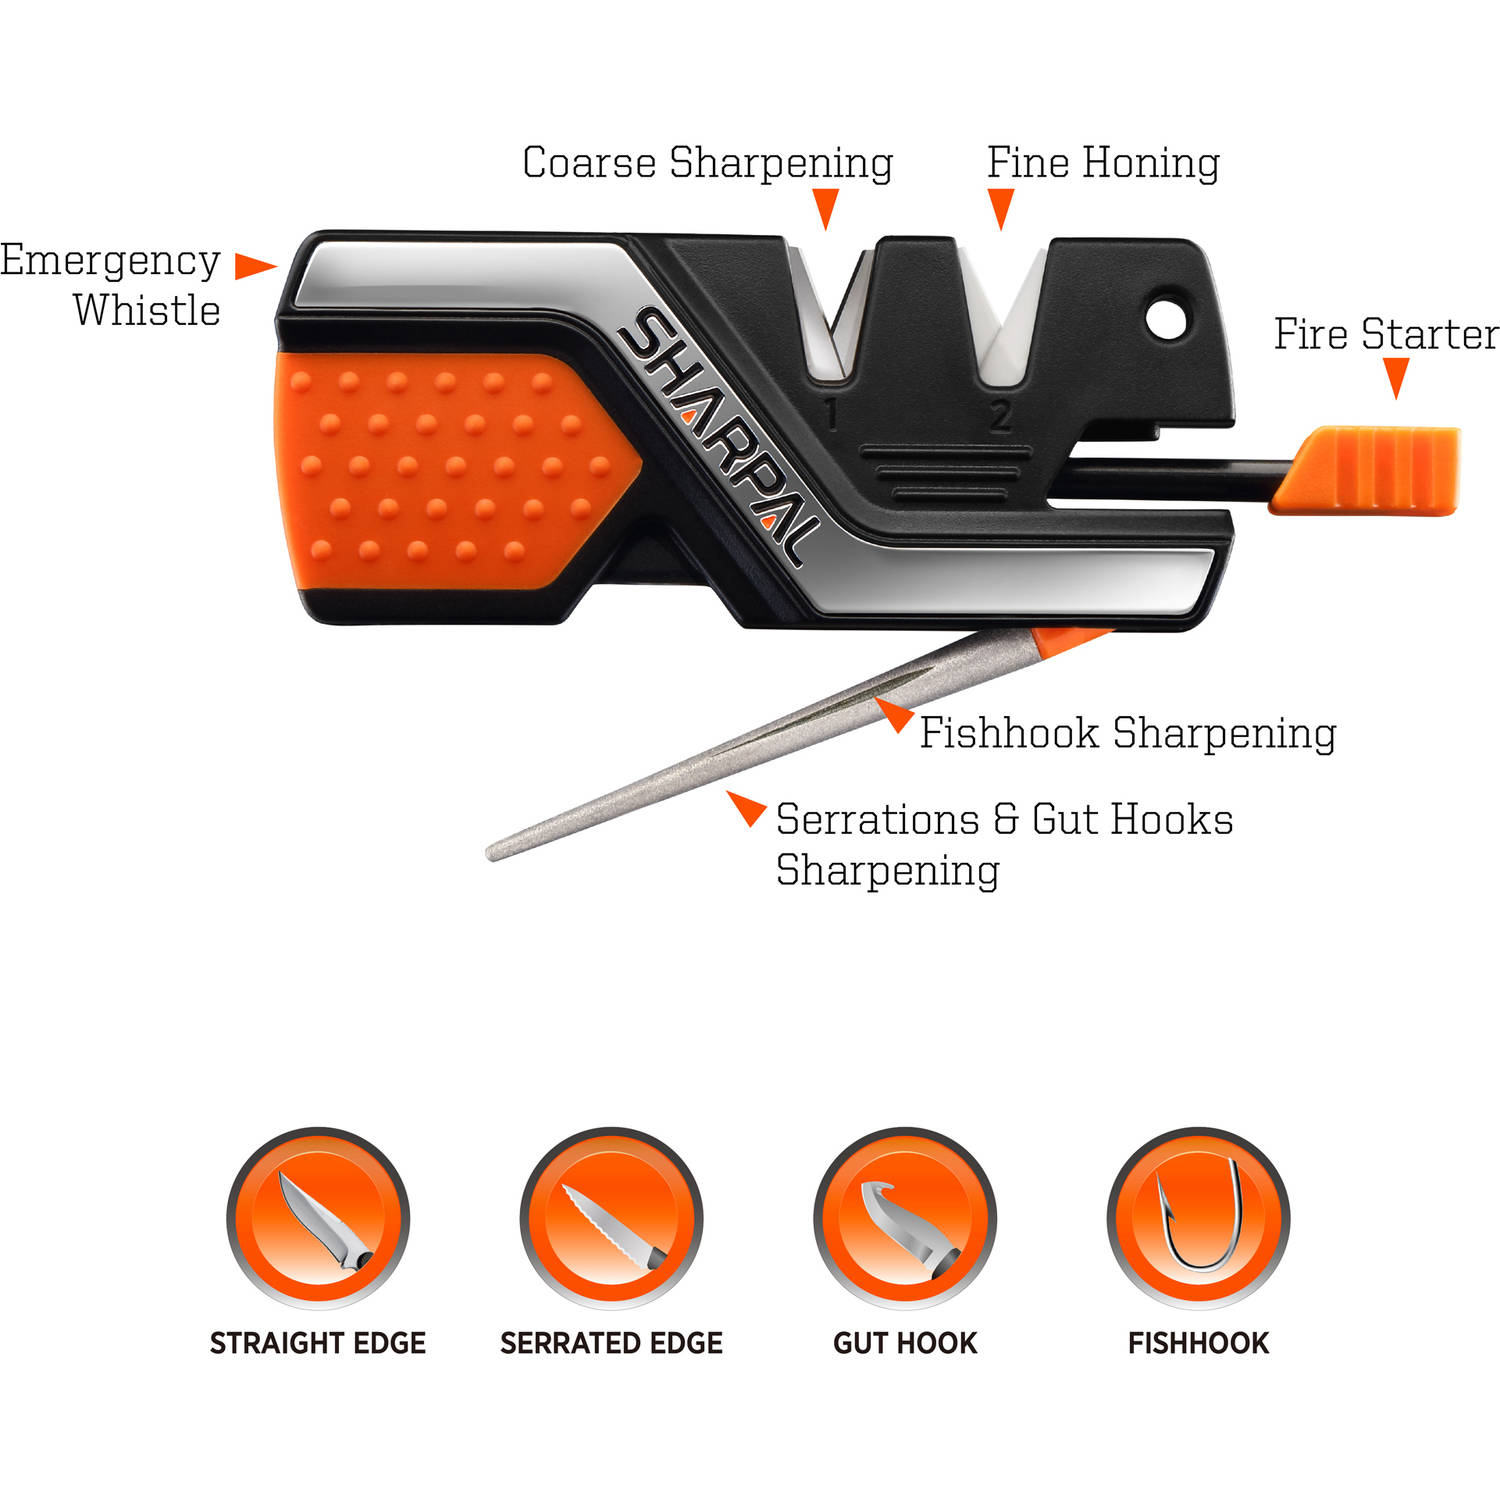 SHARPAL 101N 6-In-1 Pocket Knife Sharpener & Survival Tool, with